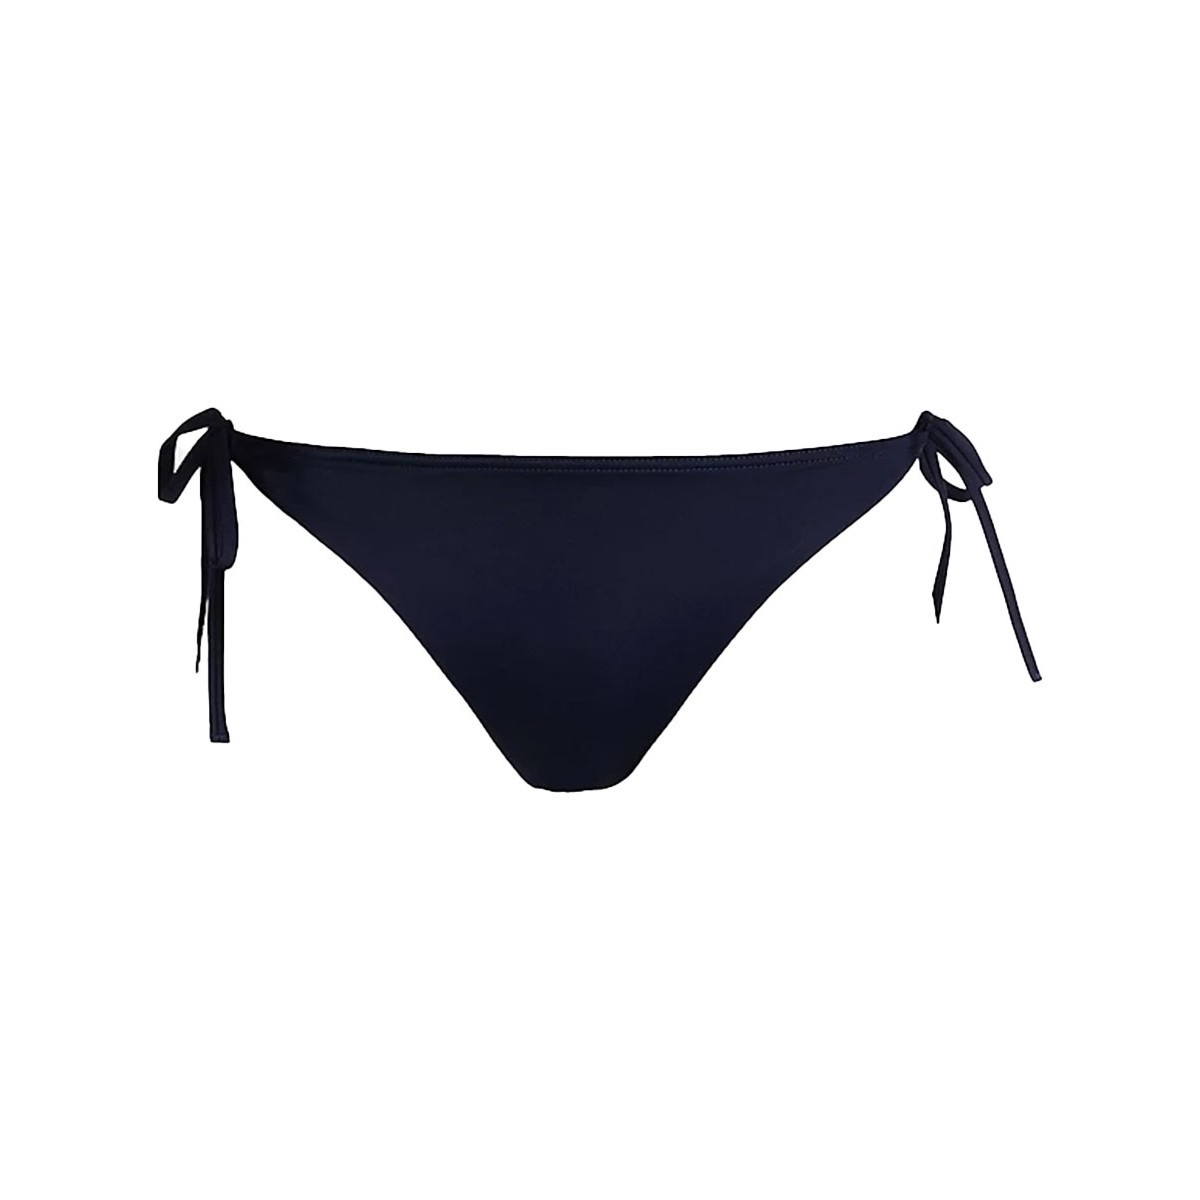 Vêtements Femme Maillots / Shorts de bain Tommy Hilfiger Bas de maillot de bain  ref 53400 DW5 marine Bleu